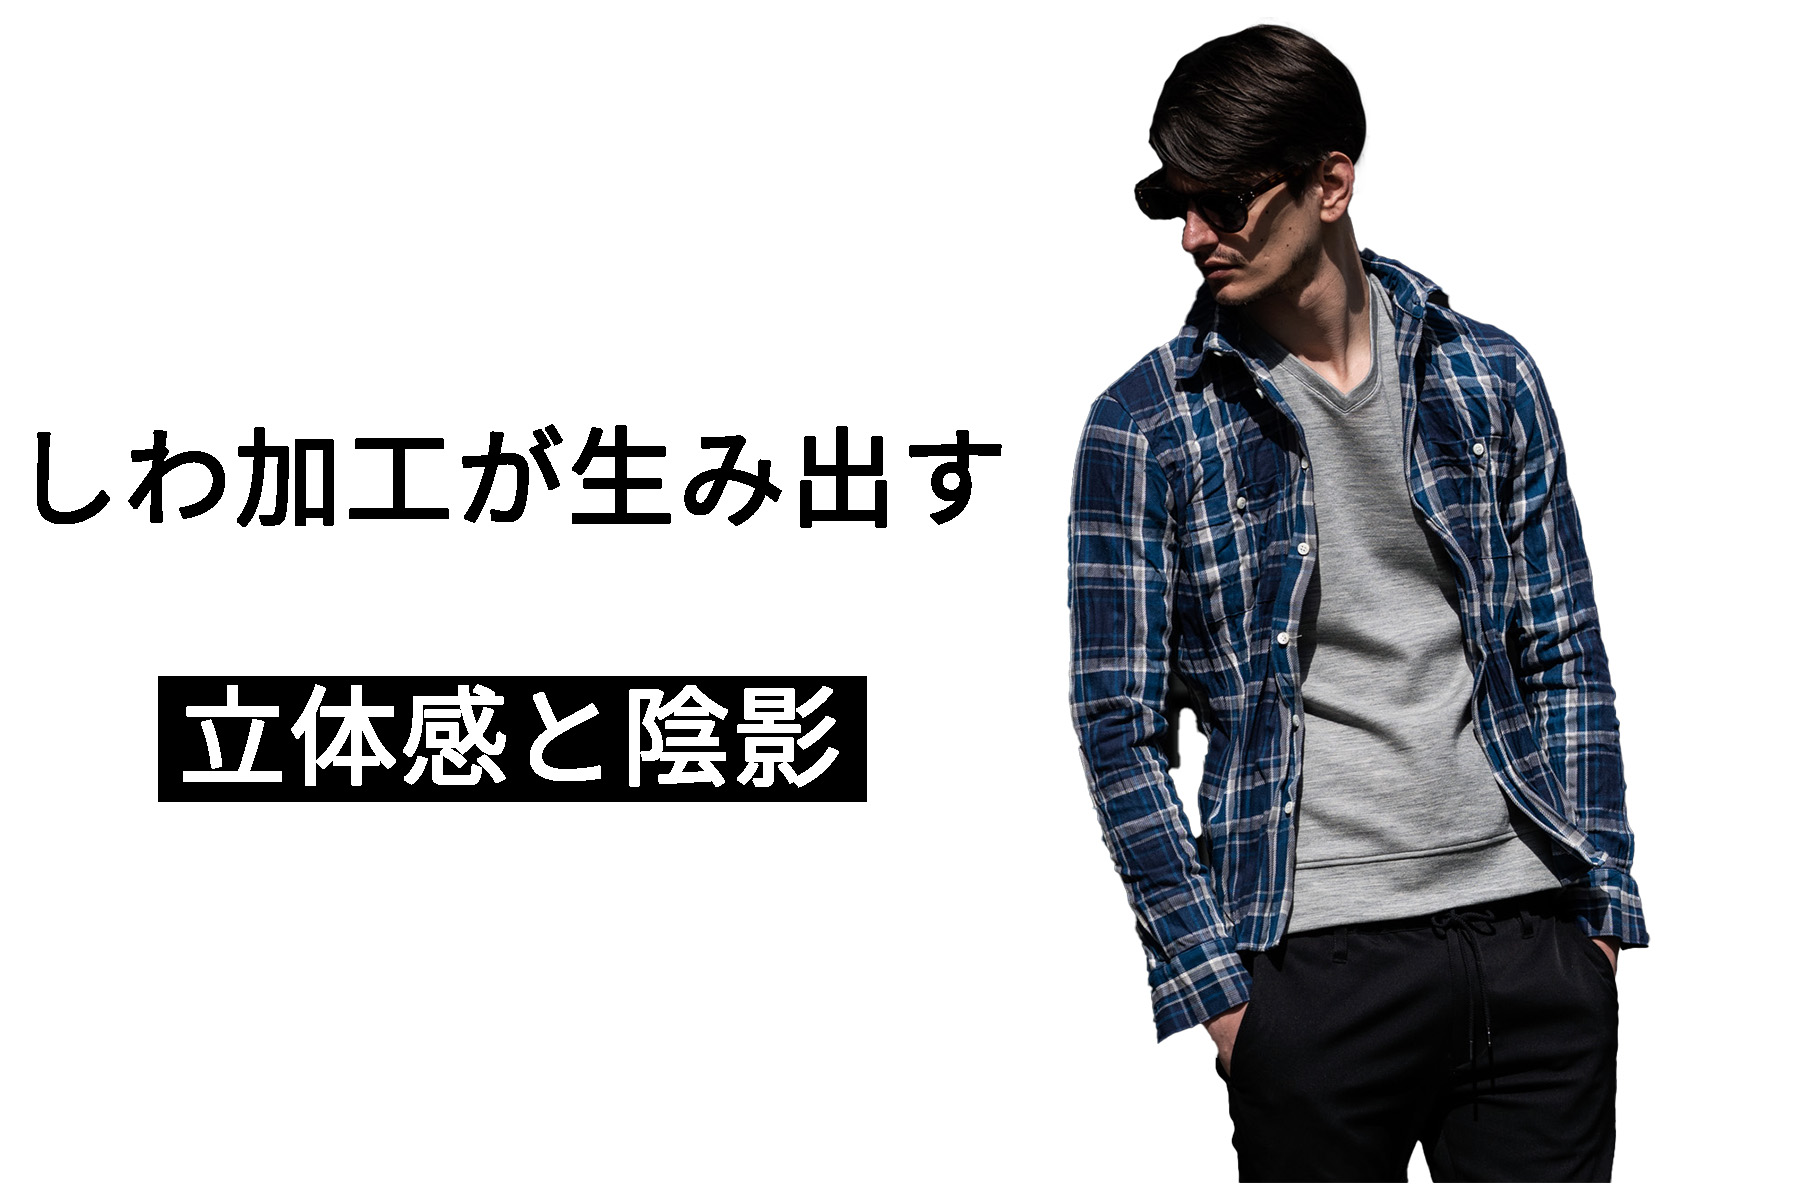 wrinkle shirt 2 model | feature | wjk online store